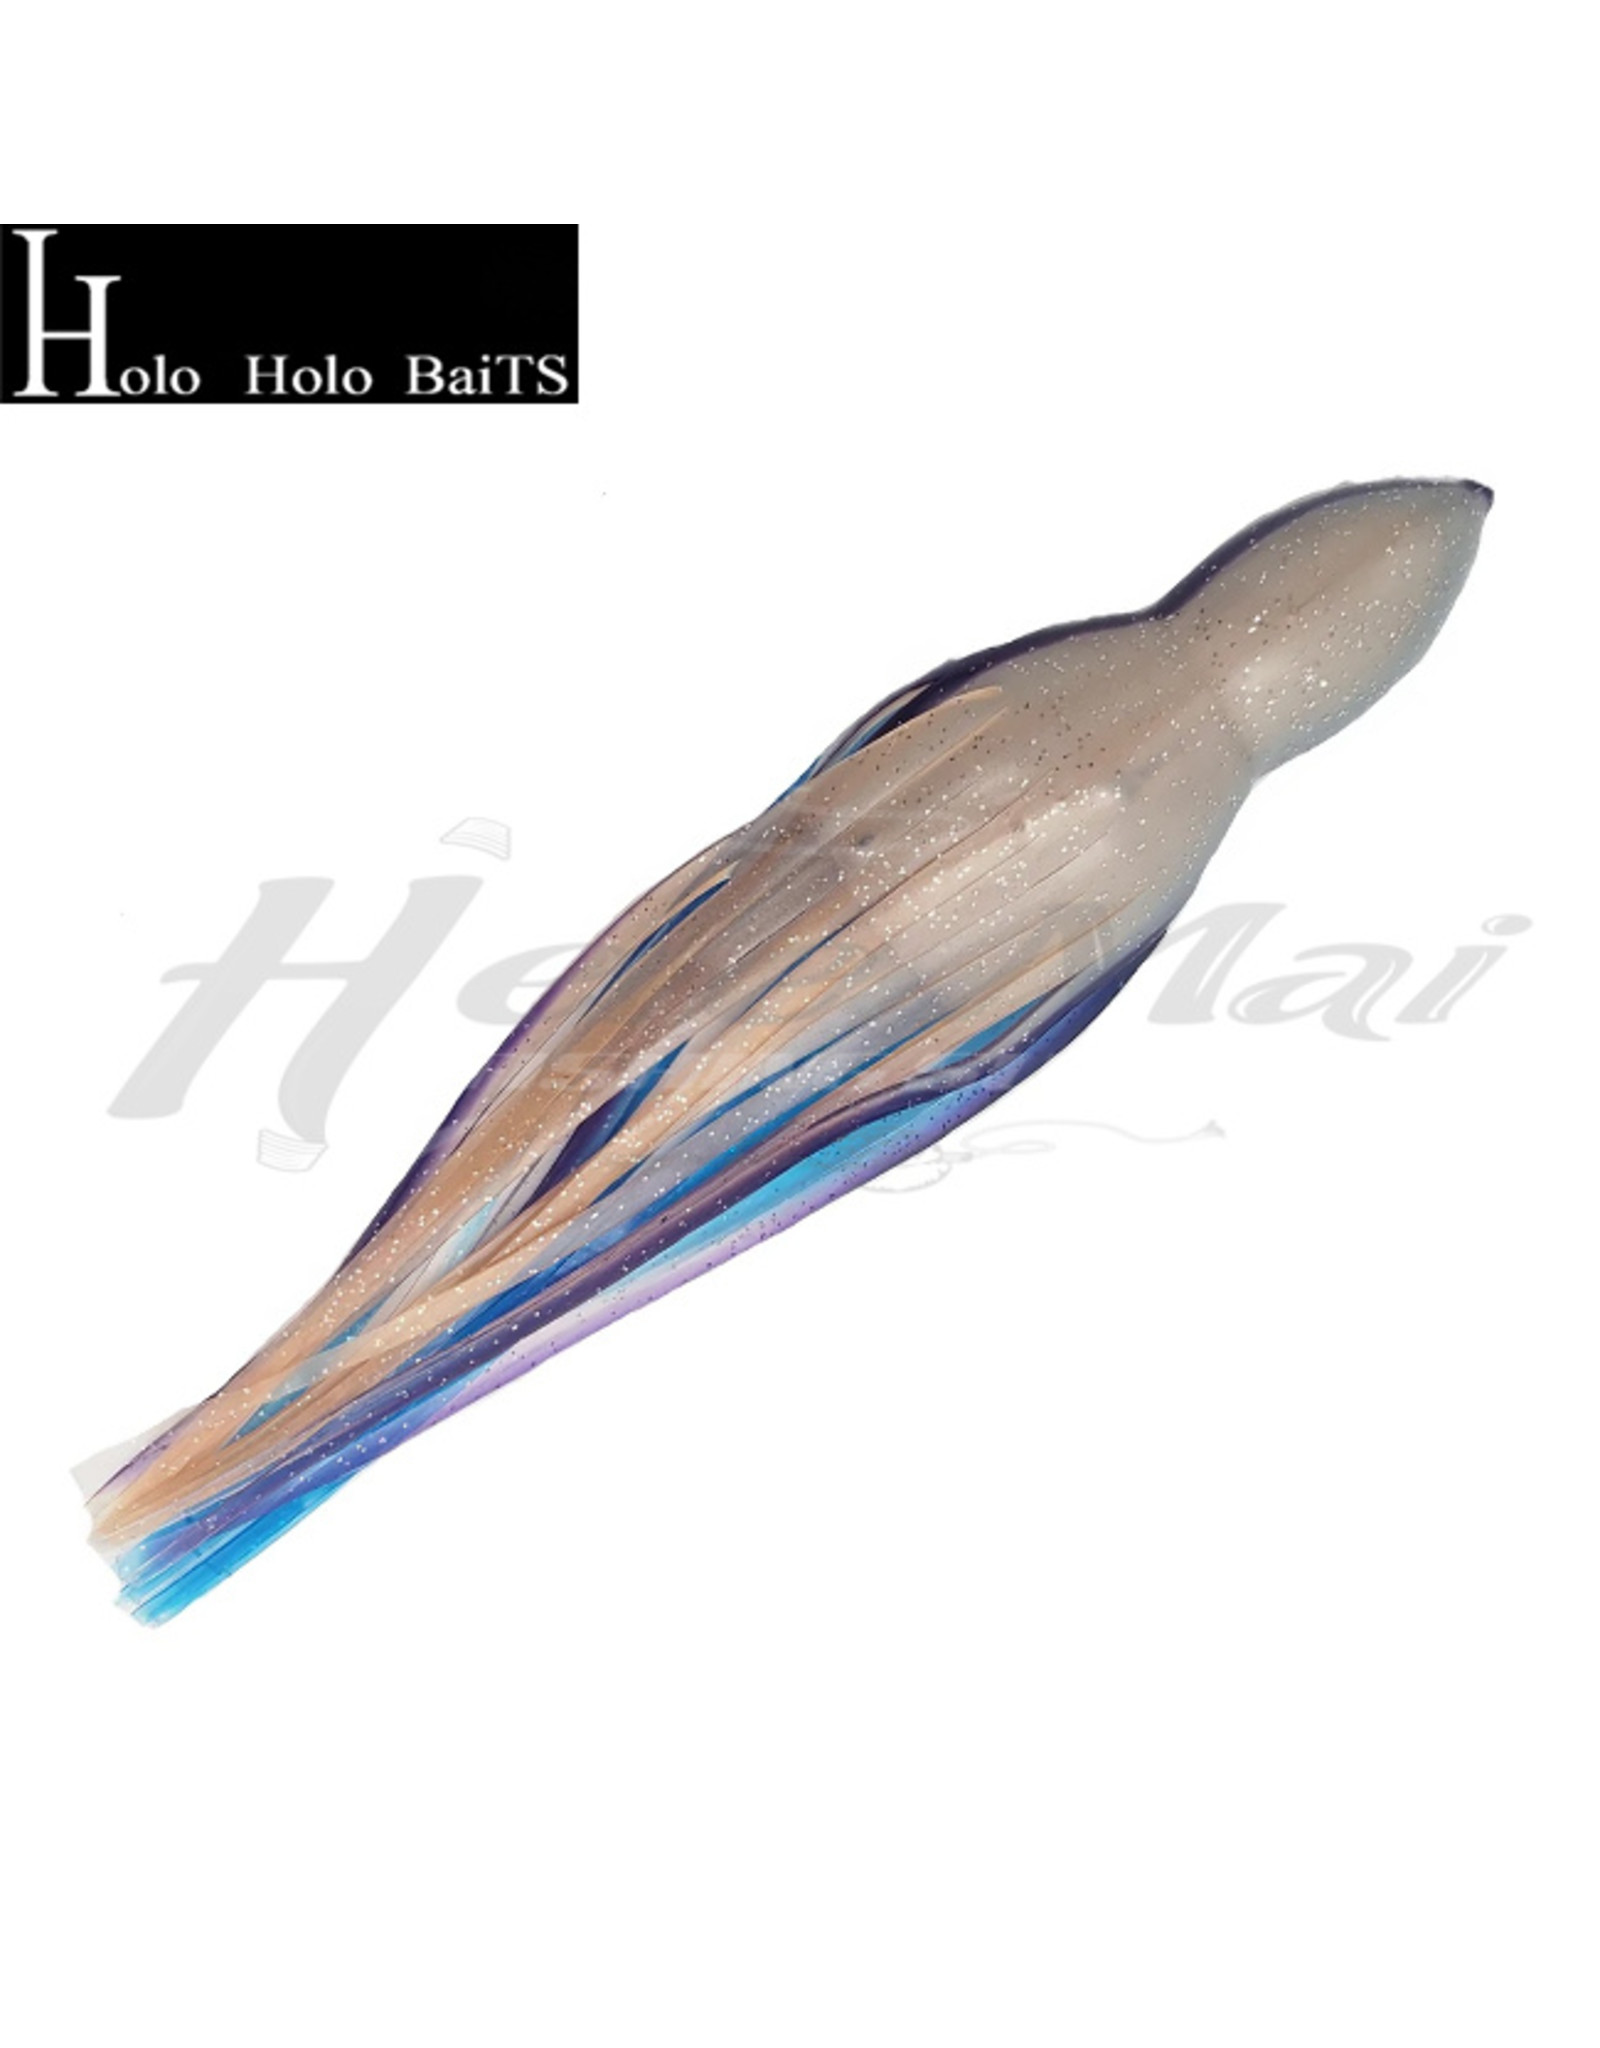 HOLO HOLO HAWAII (HHH) HH, 7" SQUID SKIRT BLUE SALMON PURPLE GLITTER SM1-6B